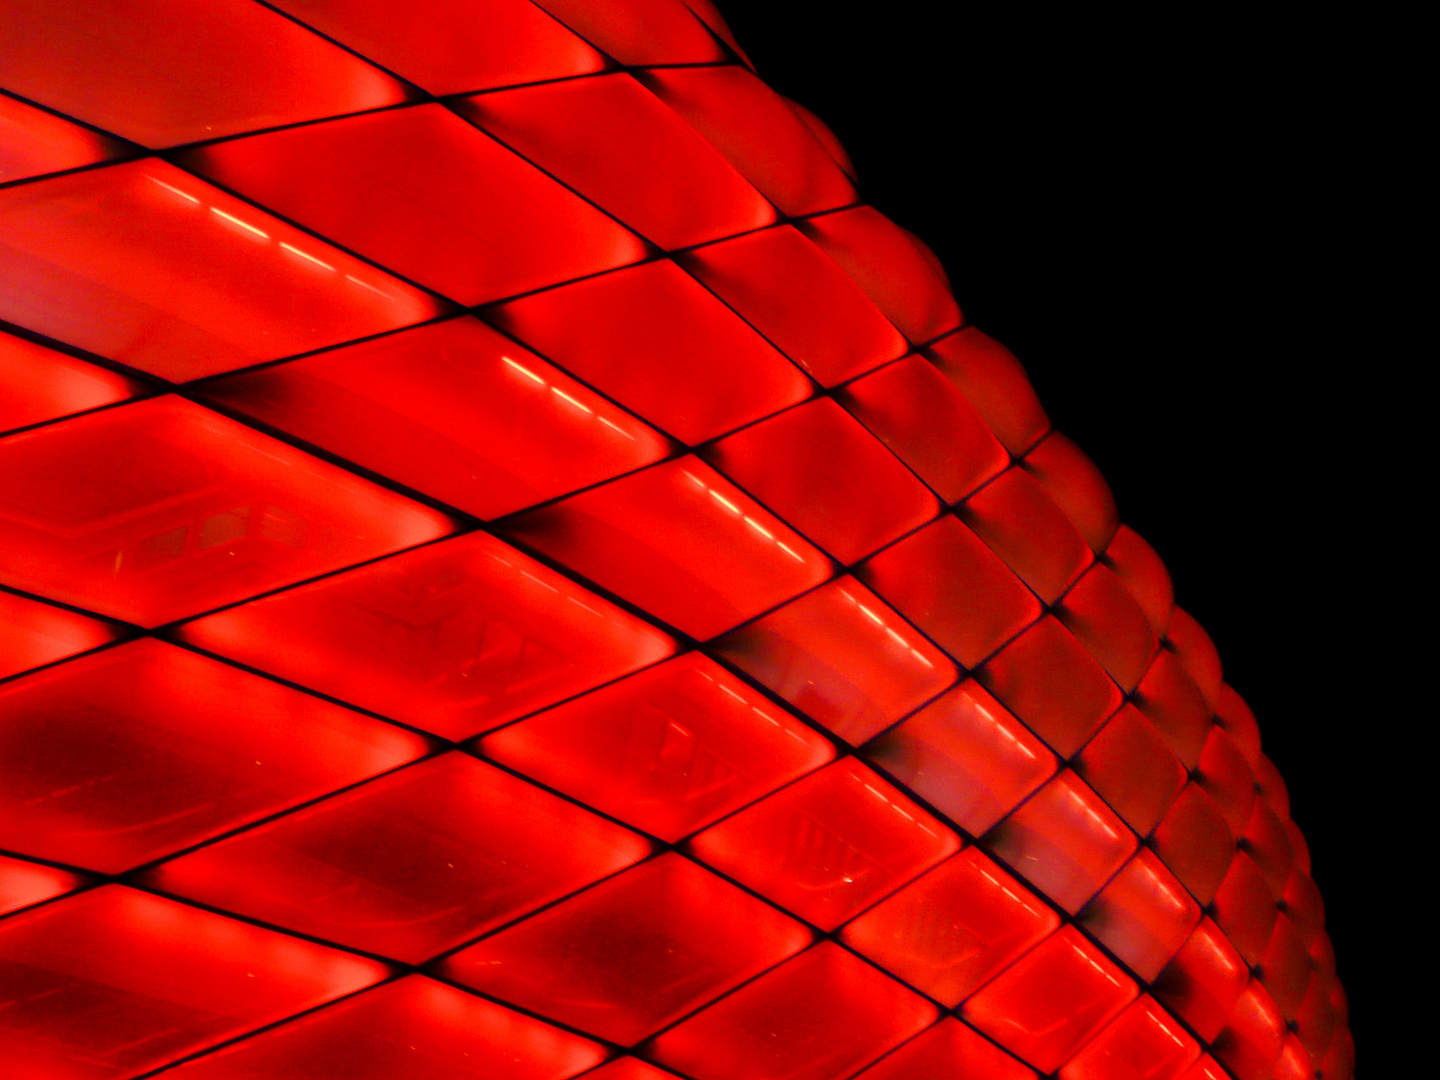 Illuminated Red Combs 1